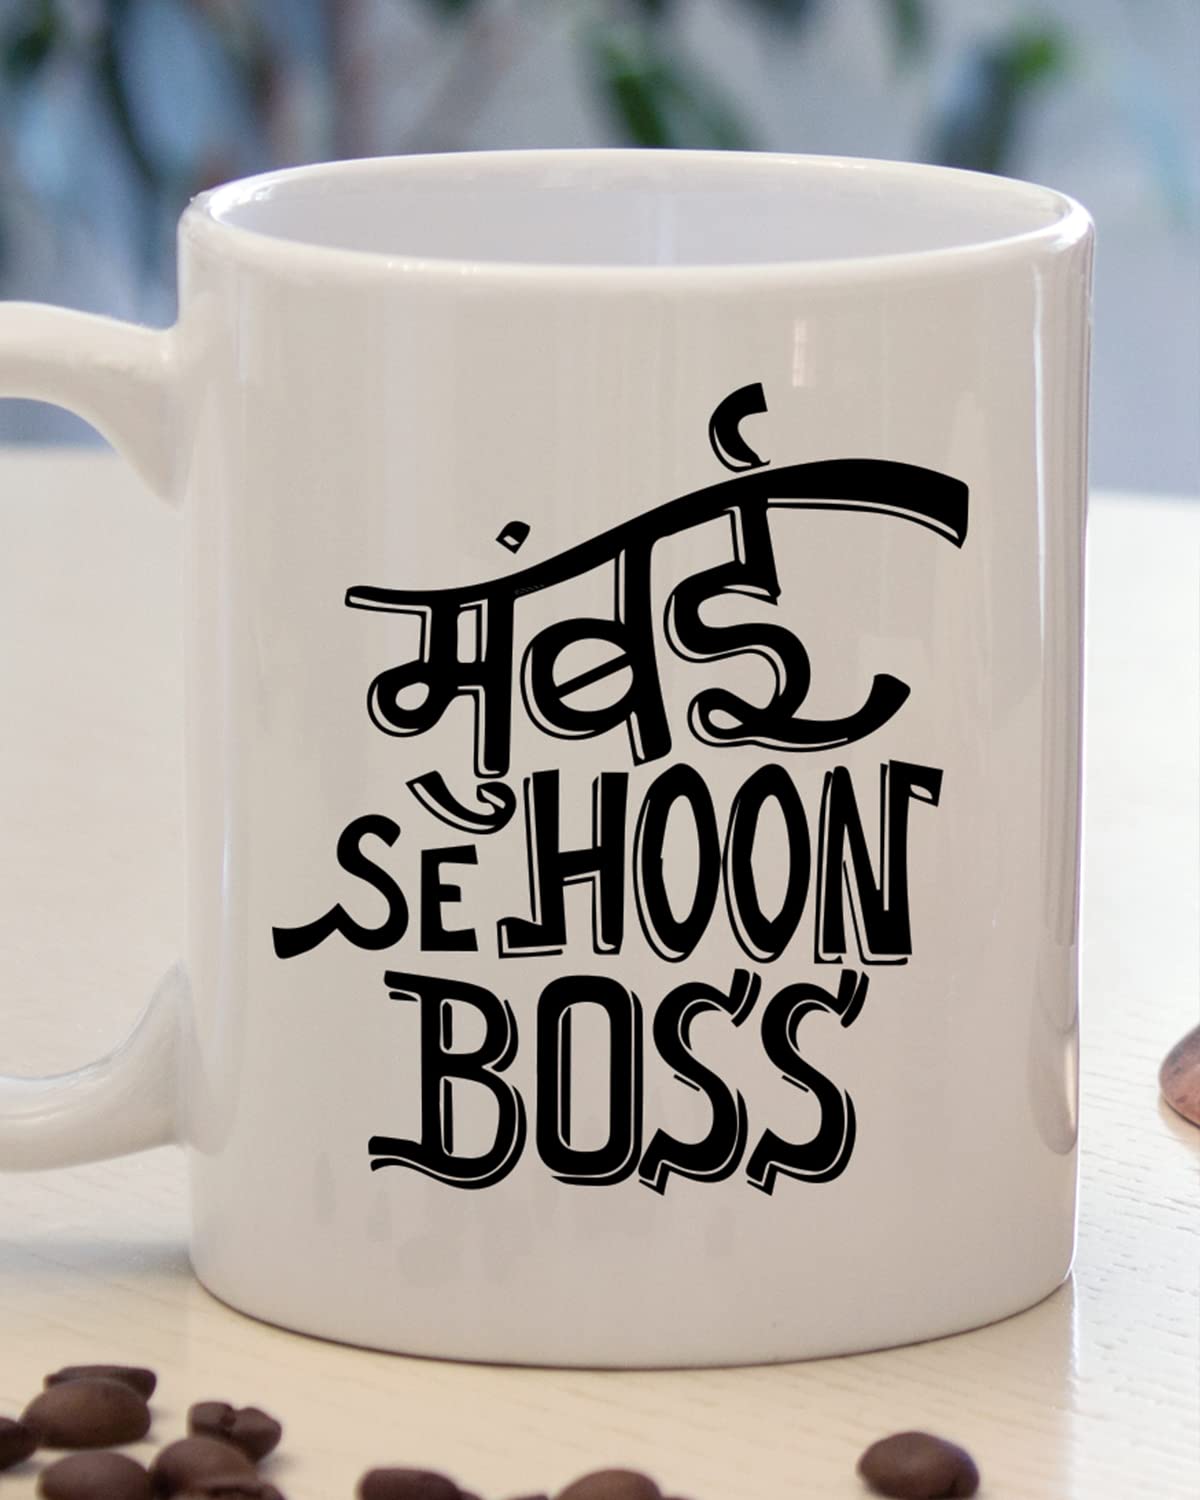 Mumbai SE Hoon BOSS Coffee Mug - Gift for Friend, Birthday Gift, Birthday Mug, Printed with Funny & Funky Dialogues, Bollywood & Web Series Mugs, Funny Mugs